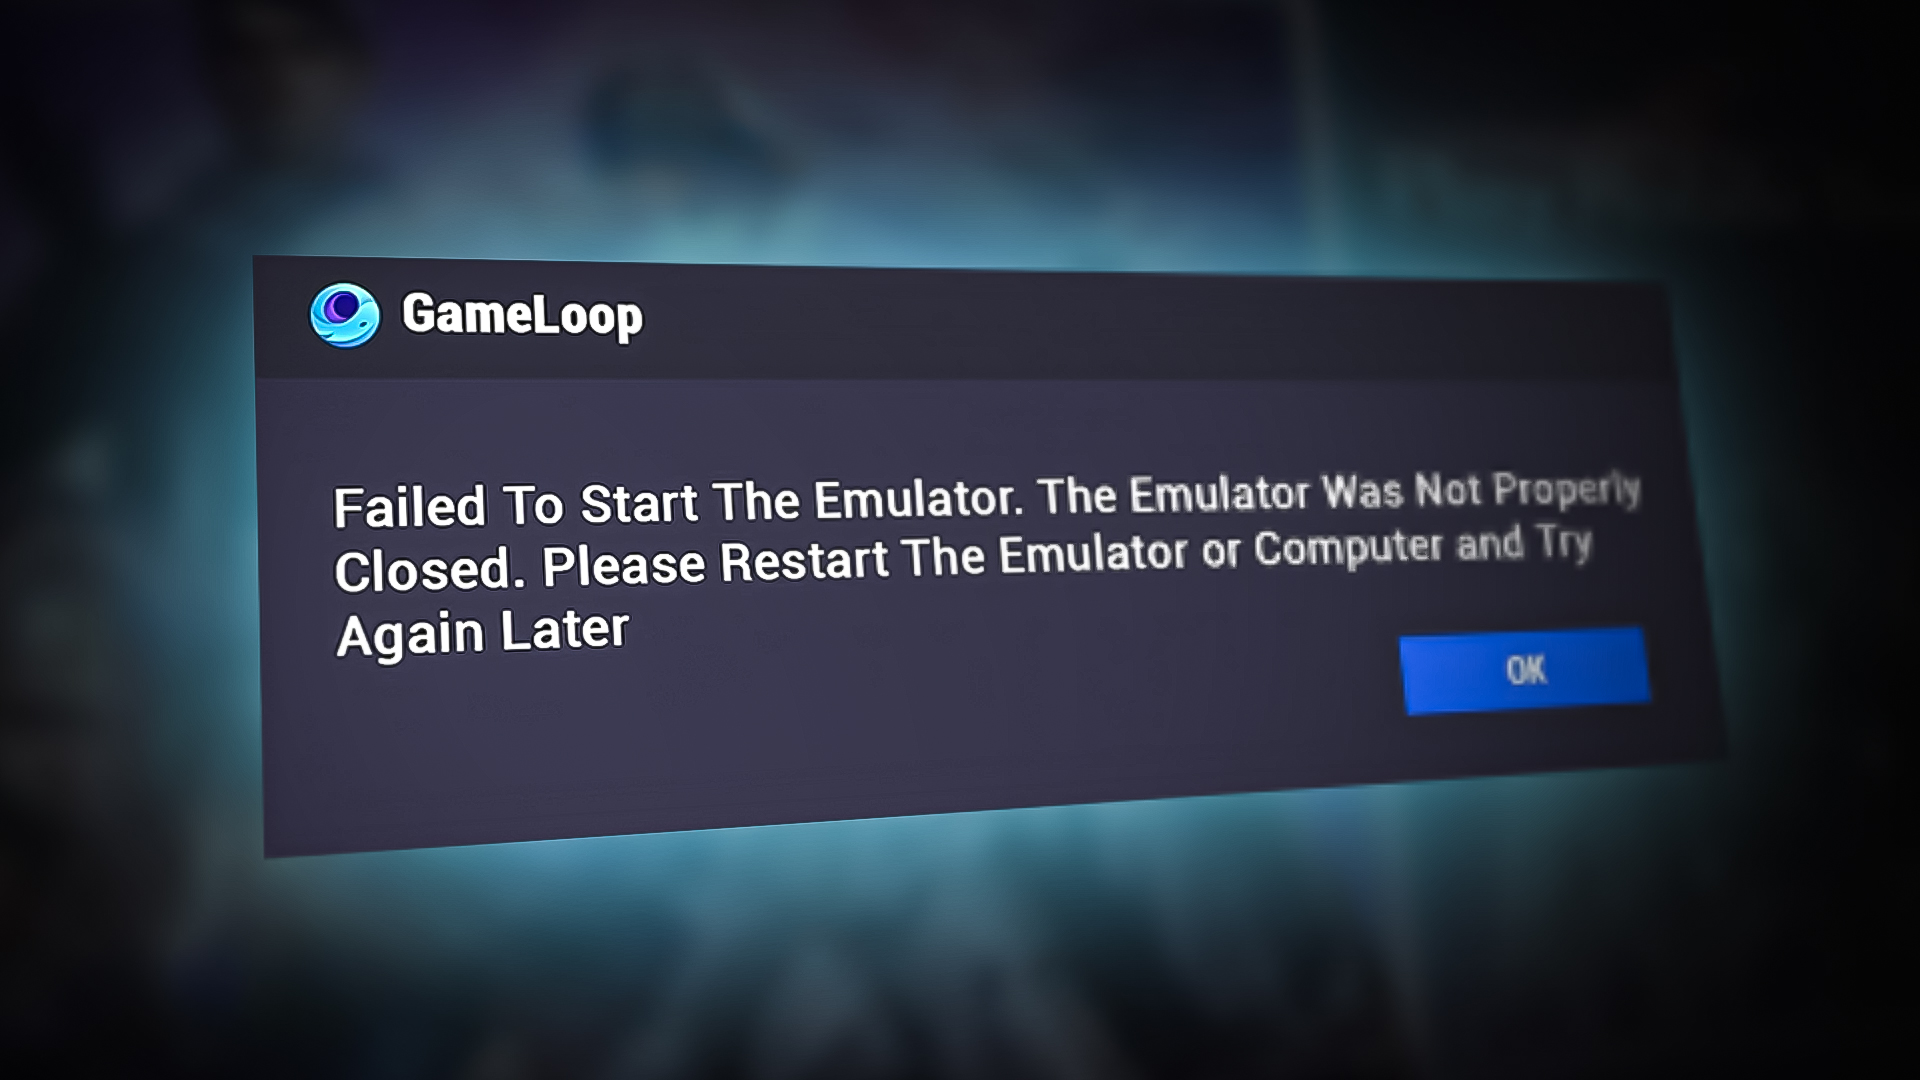 GameLoop Failed to Start the Emulator Error